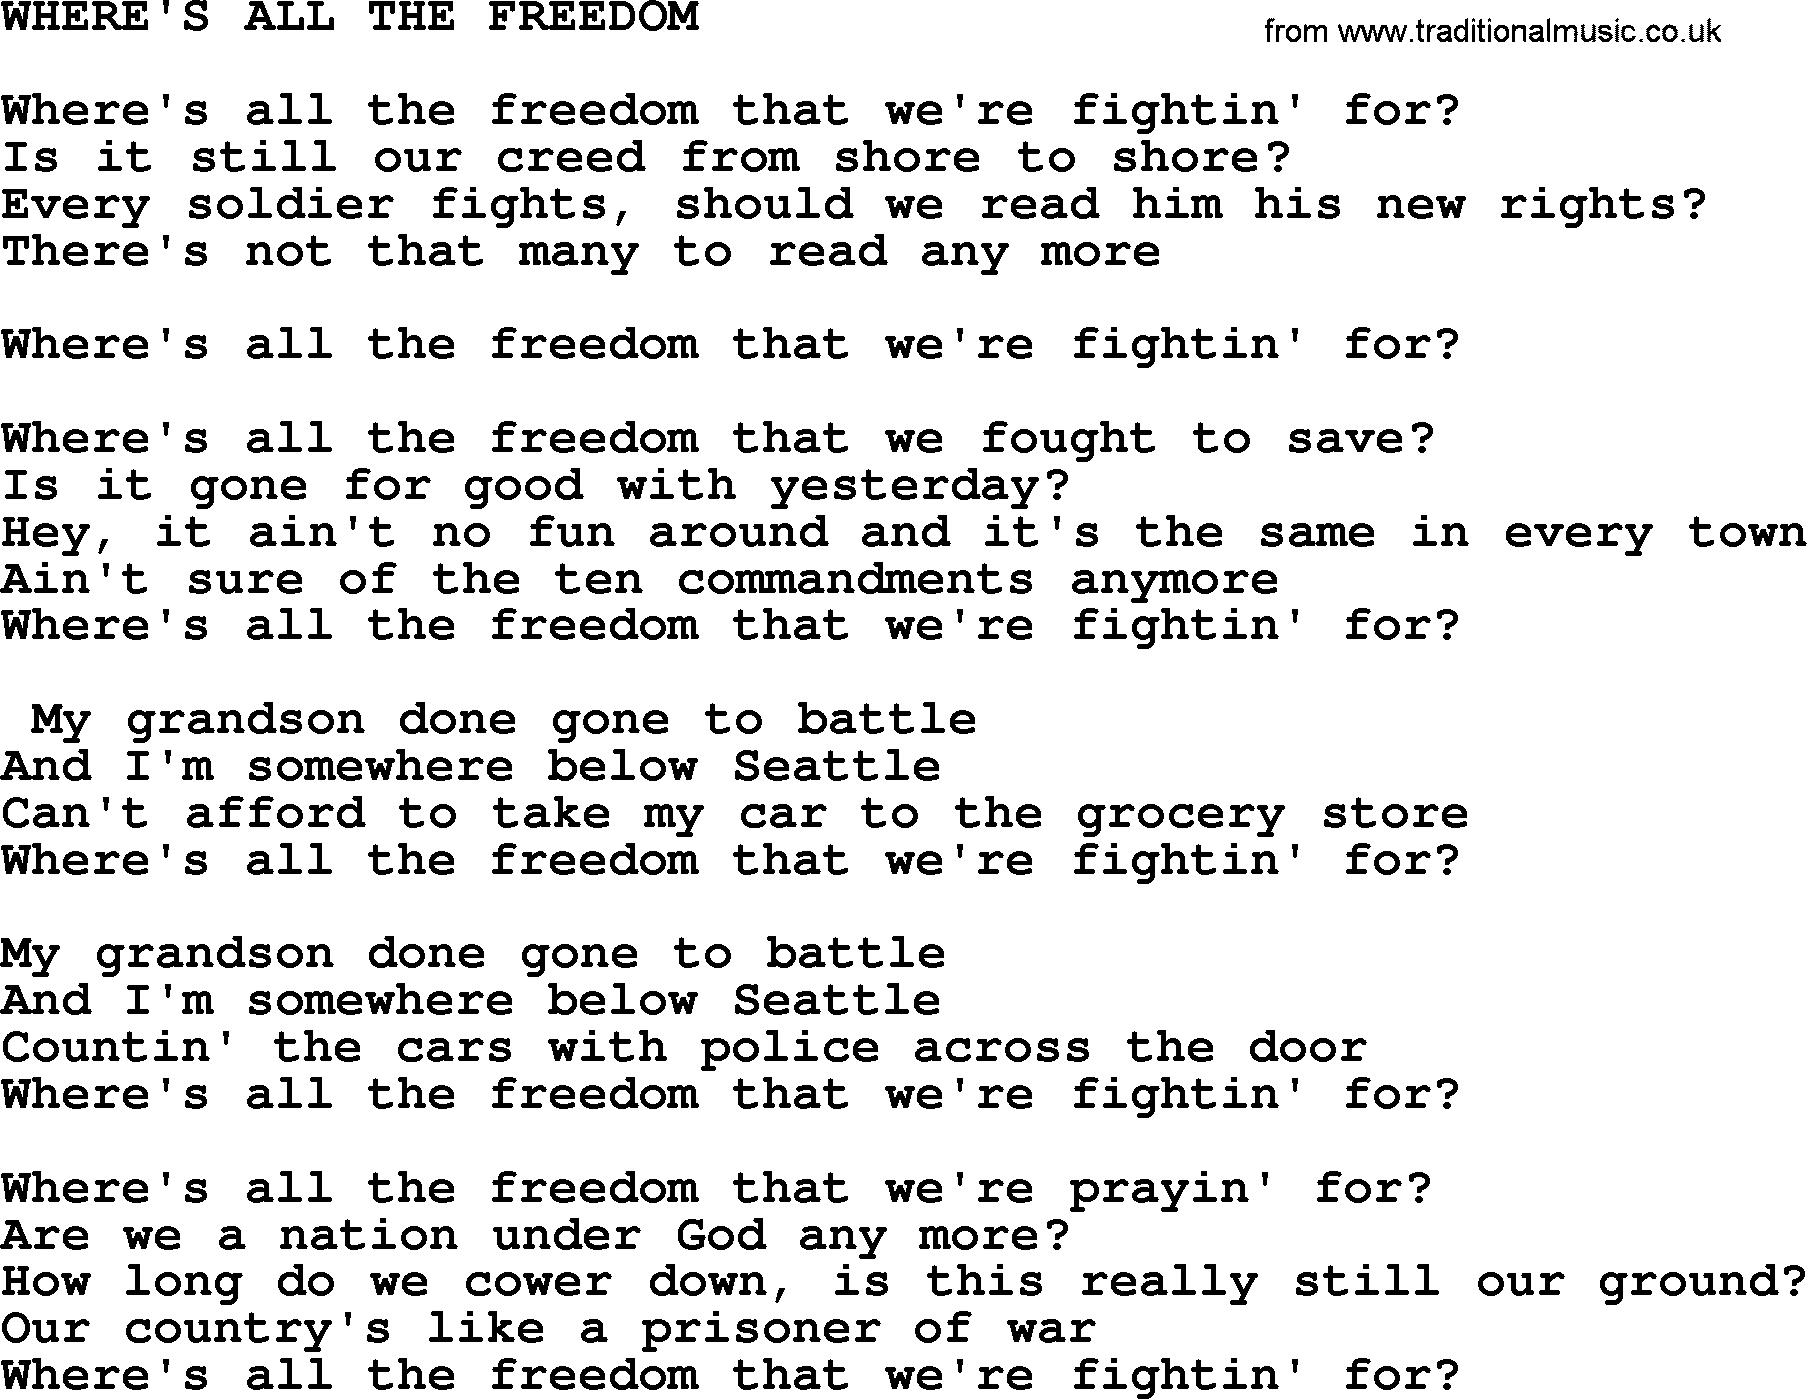 Merle Haggard song: Where's All The Freedom, lyrics.